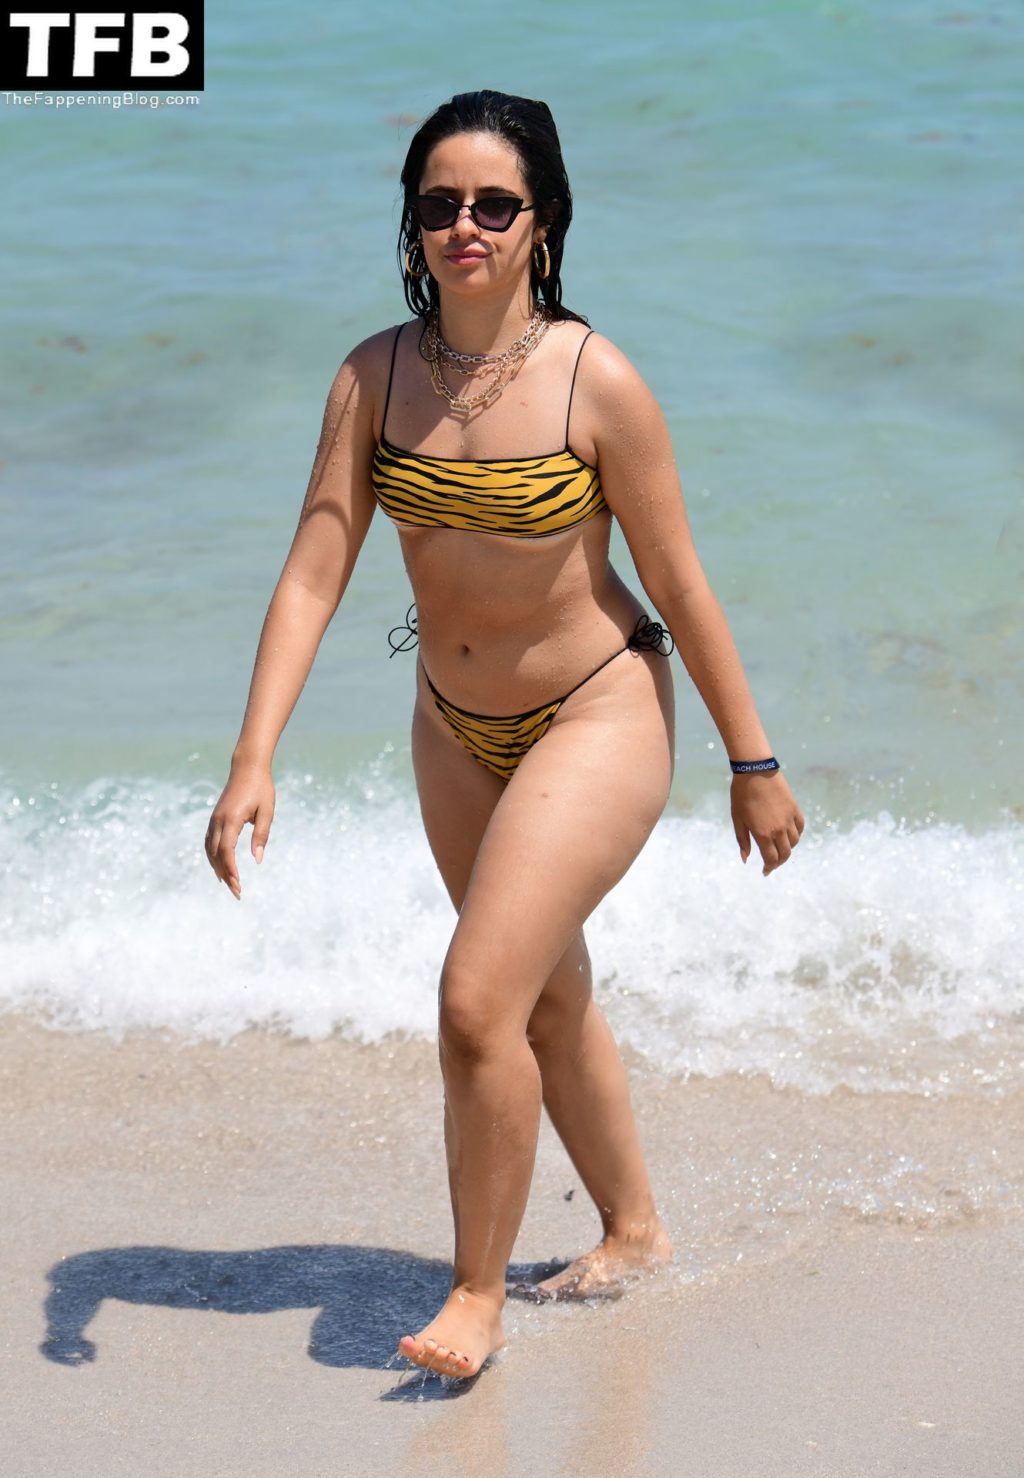 Camila Cabello Sexy The Fappening Blog 49 1024x1478 - Camila Cabello Displays Her Summer-Ready Body in Miami (108 Photos)